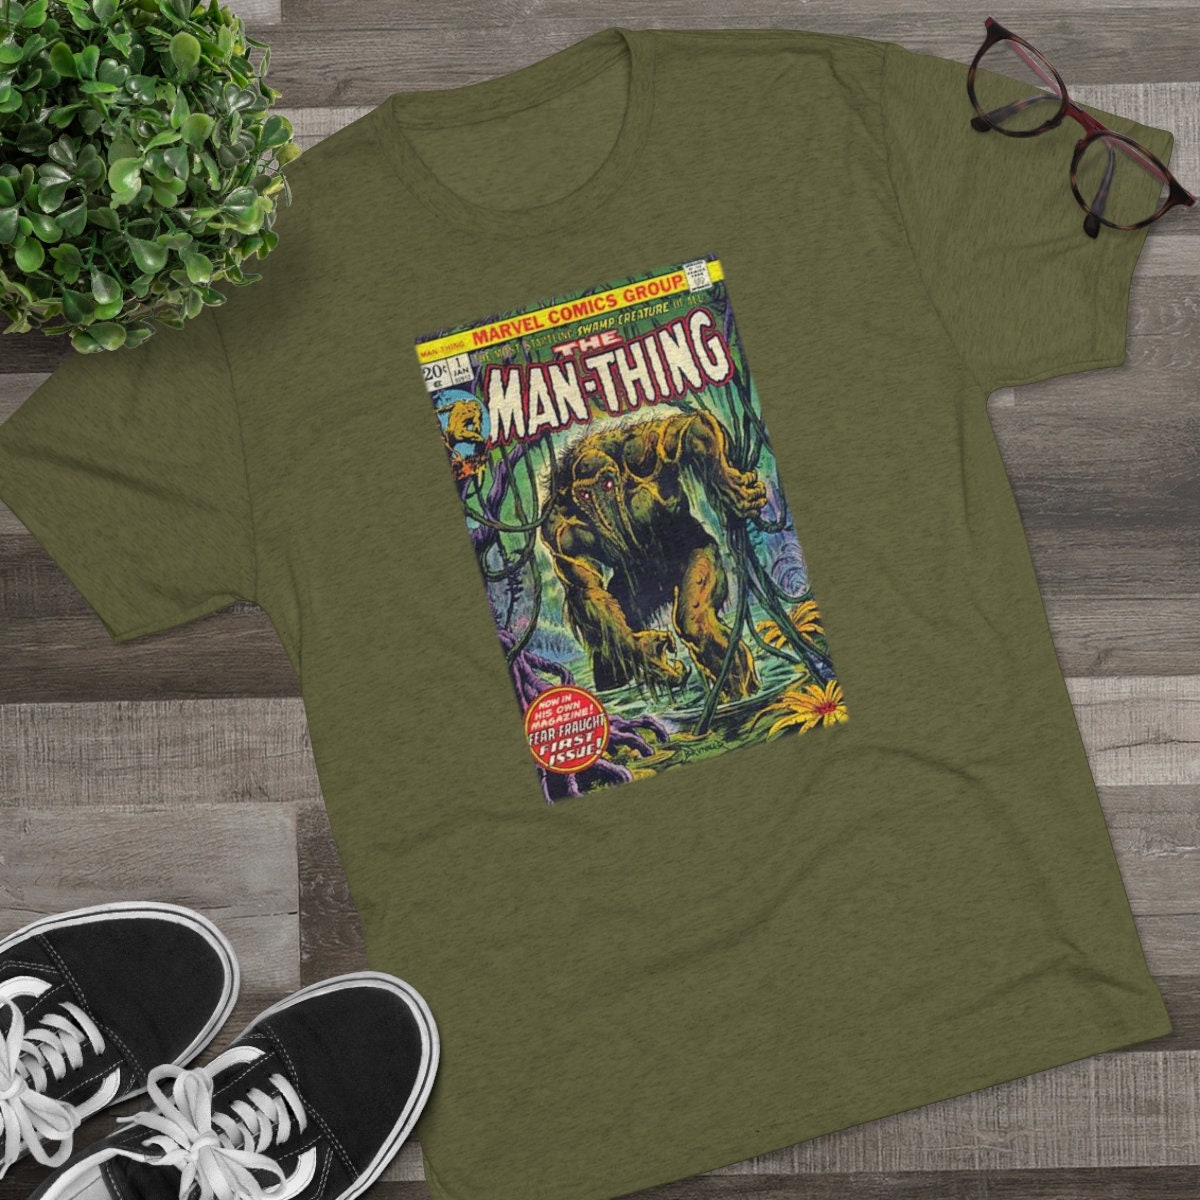 Man Thing - Werewolf by Night T-shirt